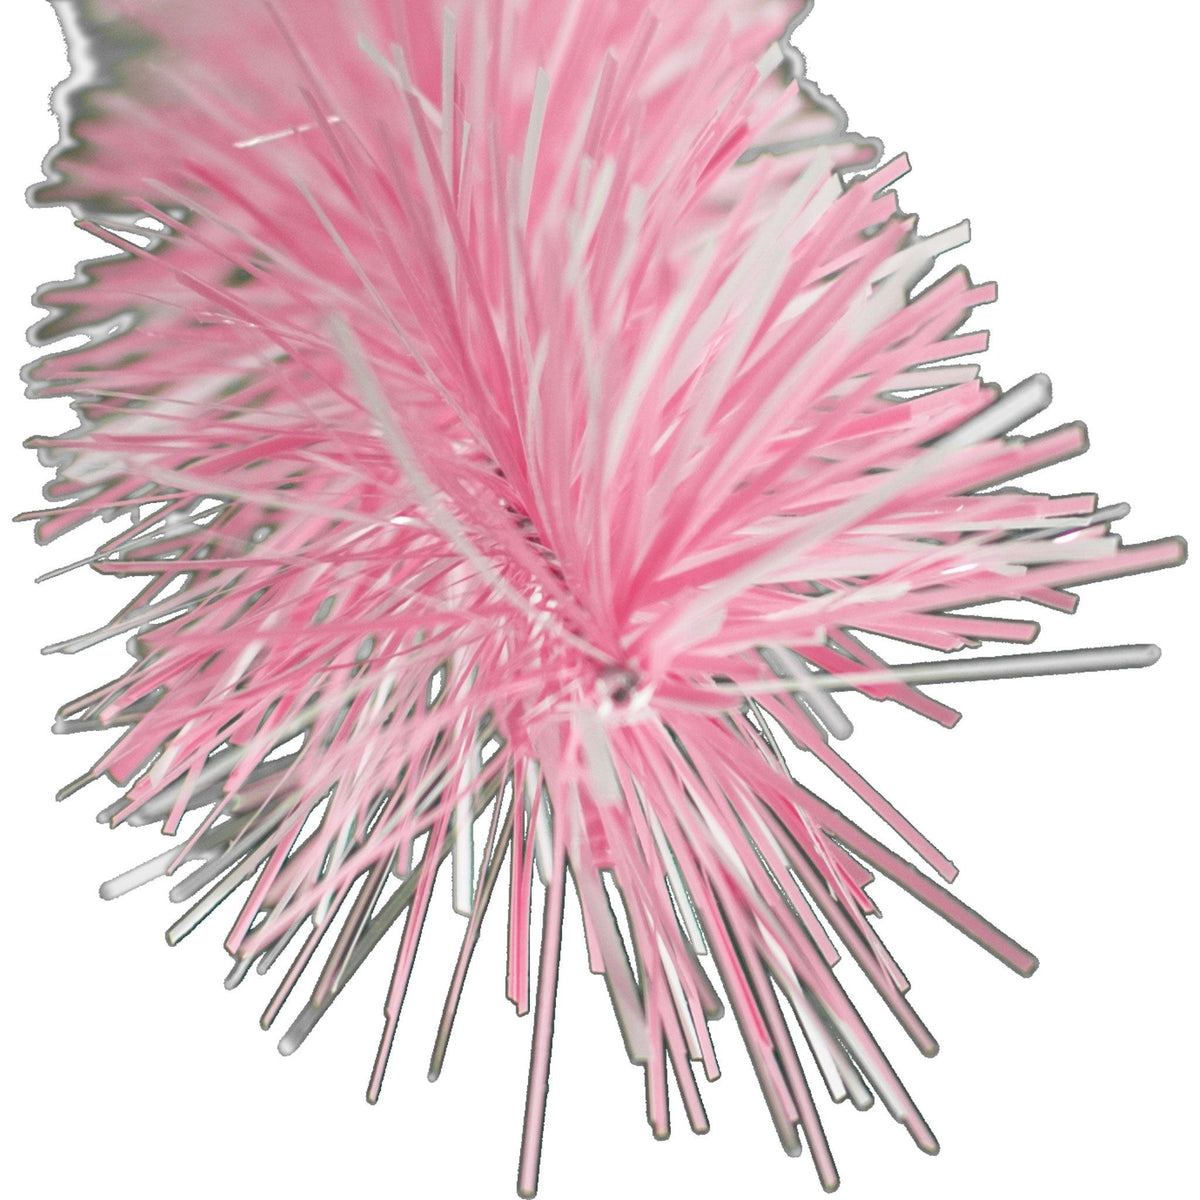 Lee Display's brand new 25ft Shiny Pink & Matte White Tinsel Garlands and Fringe Embellishments on sale at leedisplay.com